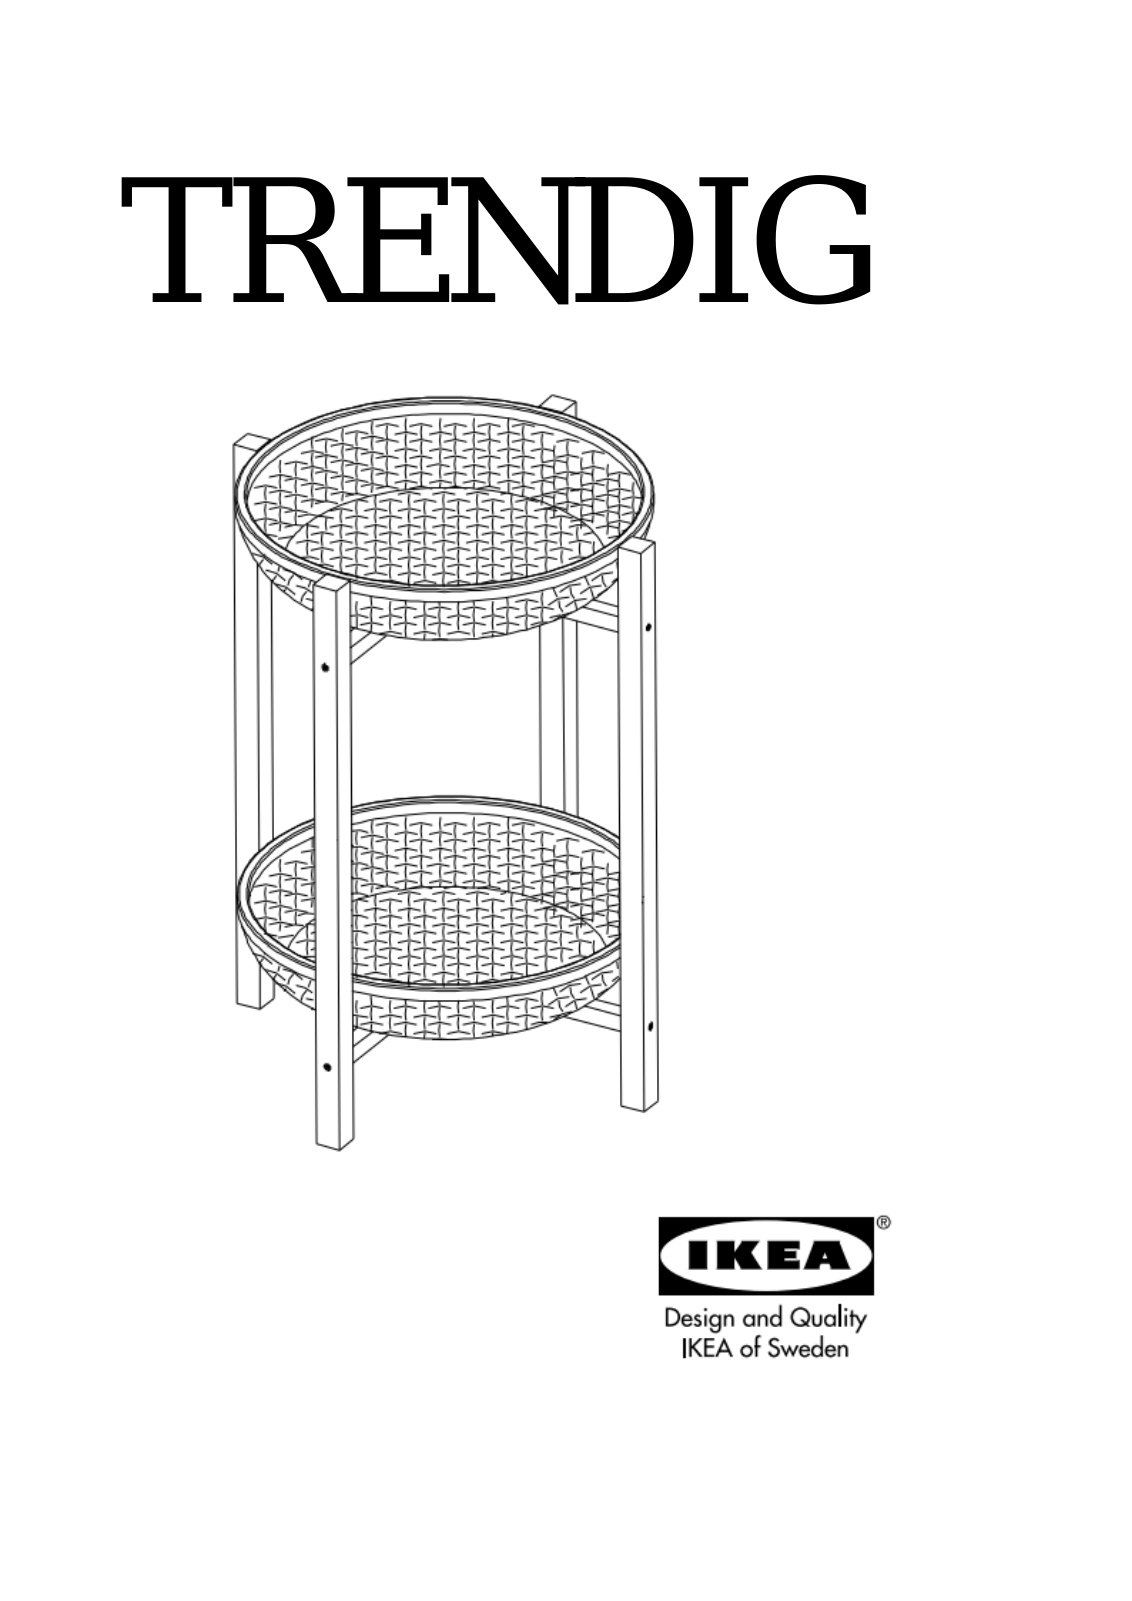 IKEA TRENDIG 2013 Tray table User Manual